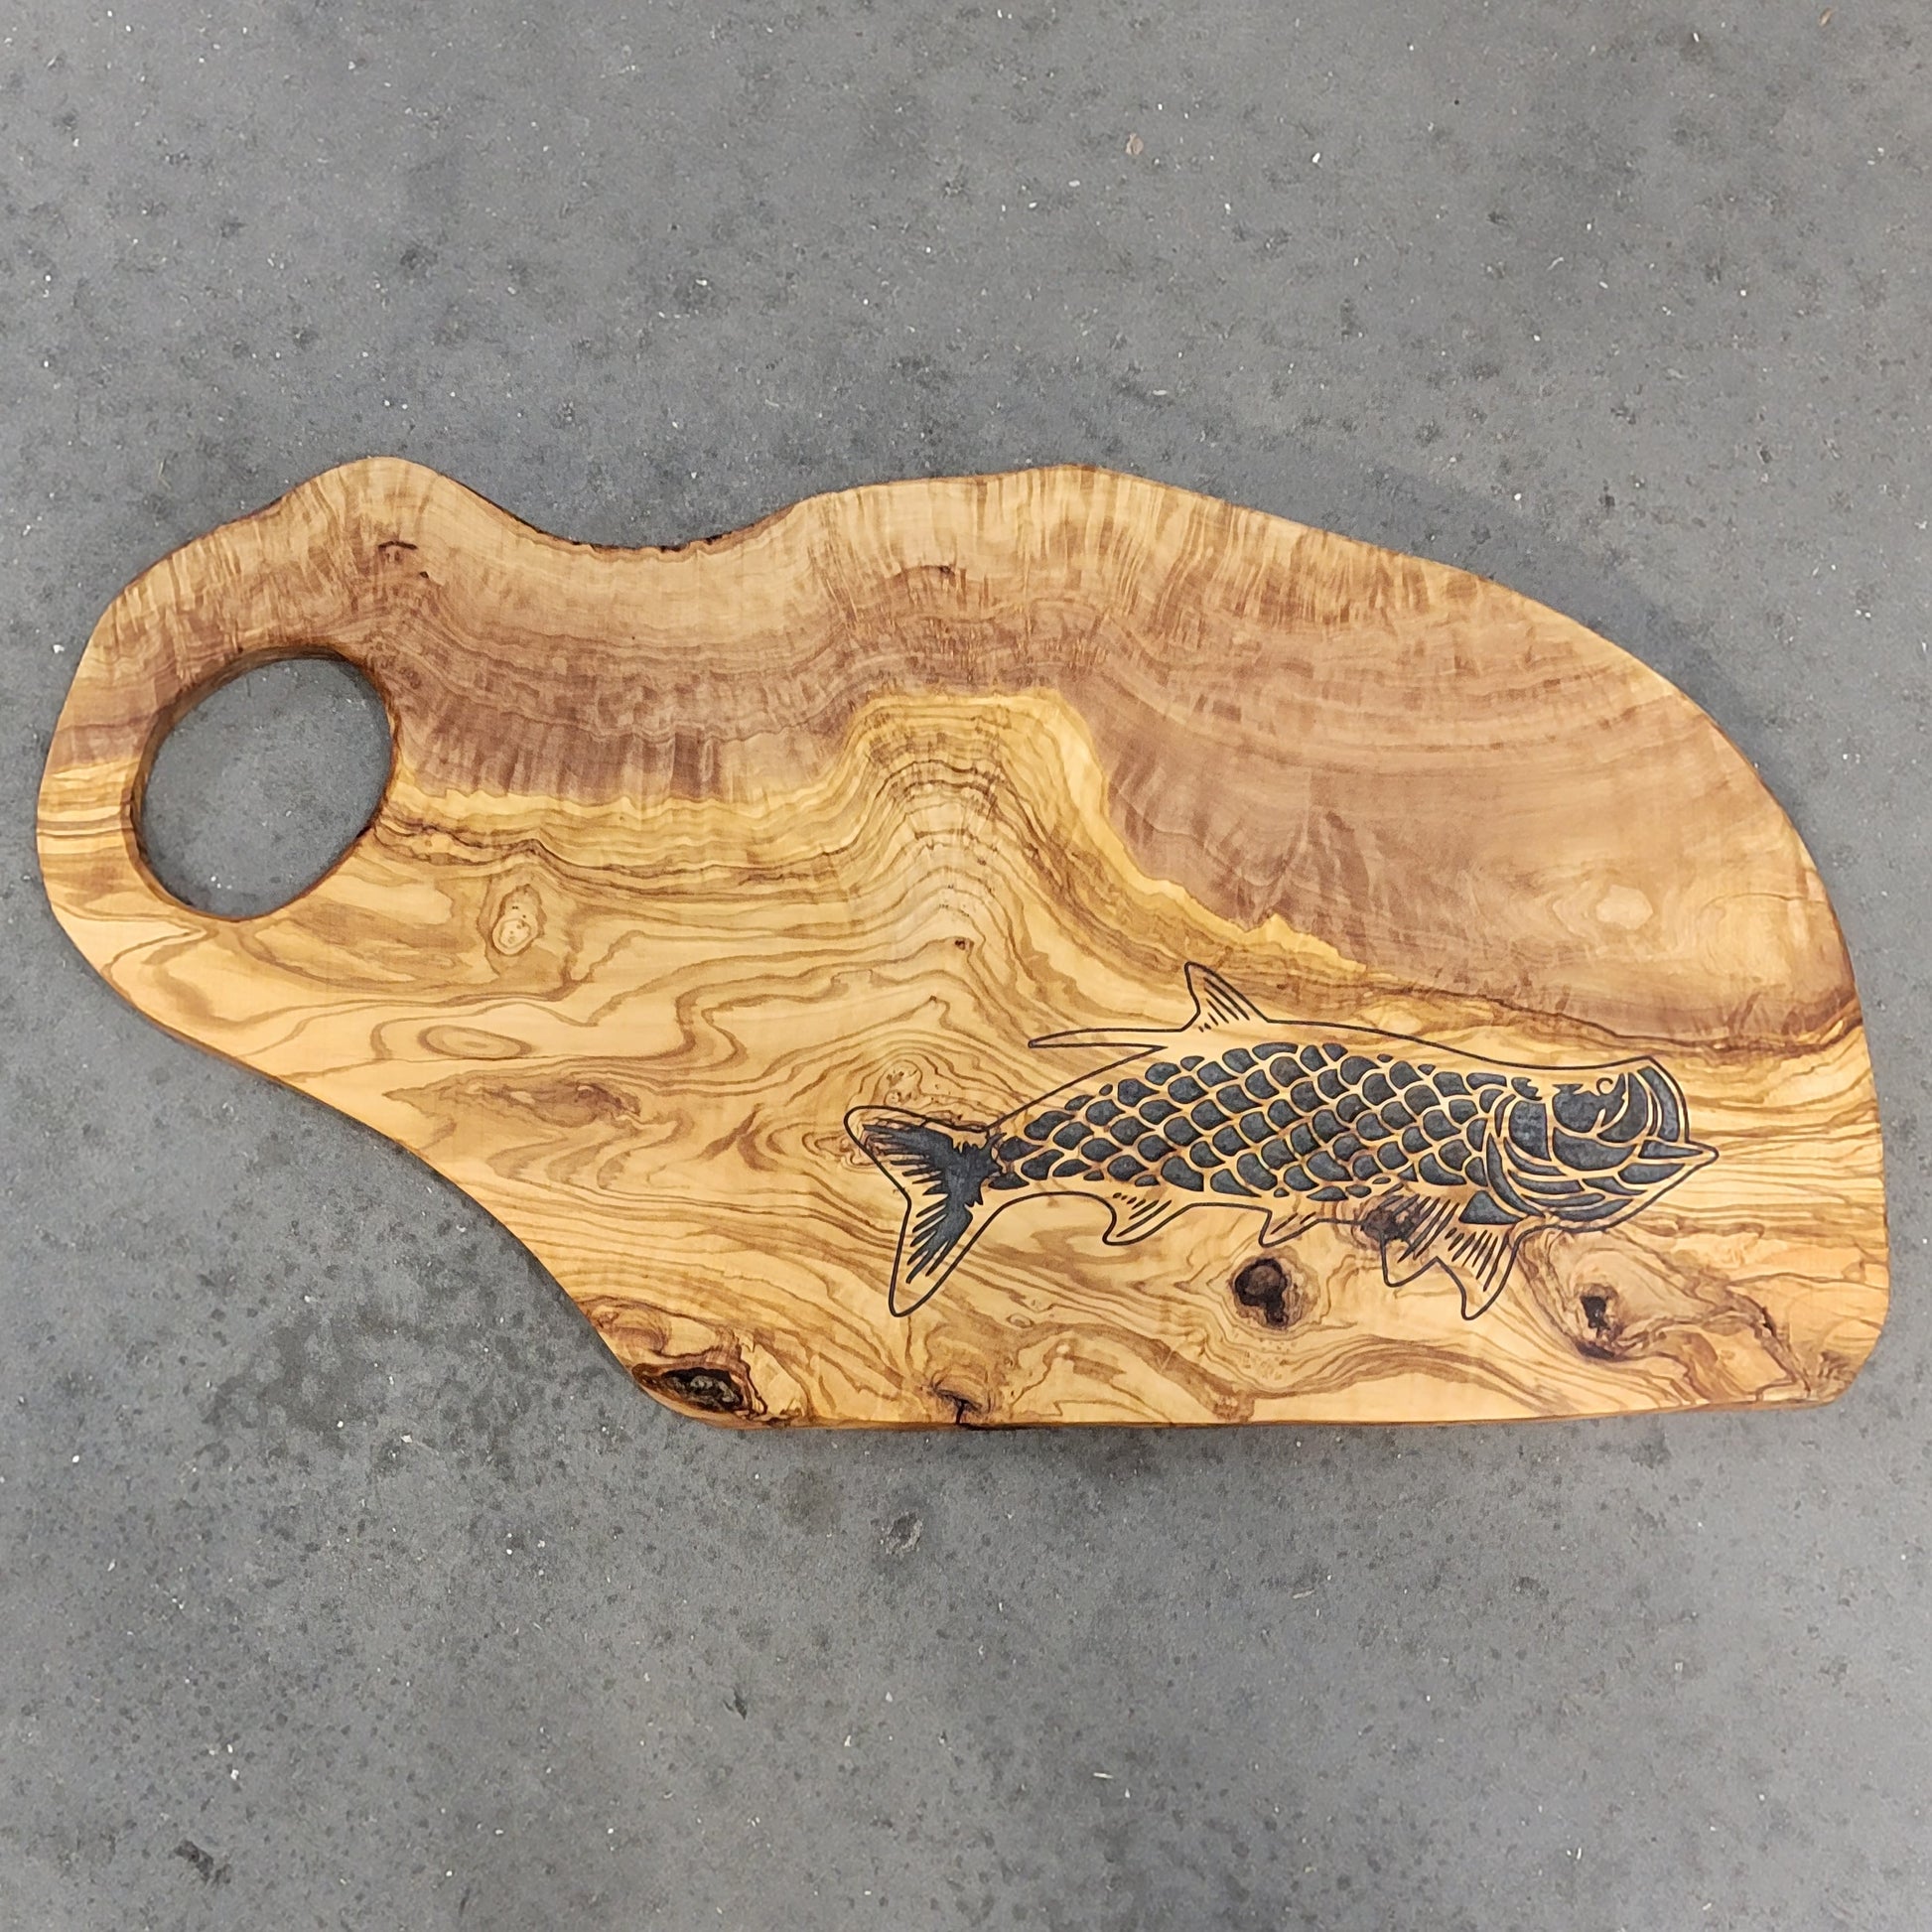 Fish Cutting Board